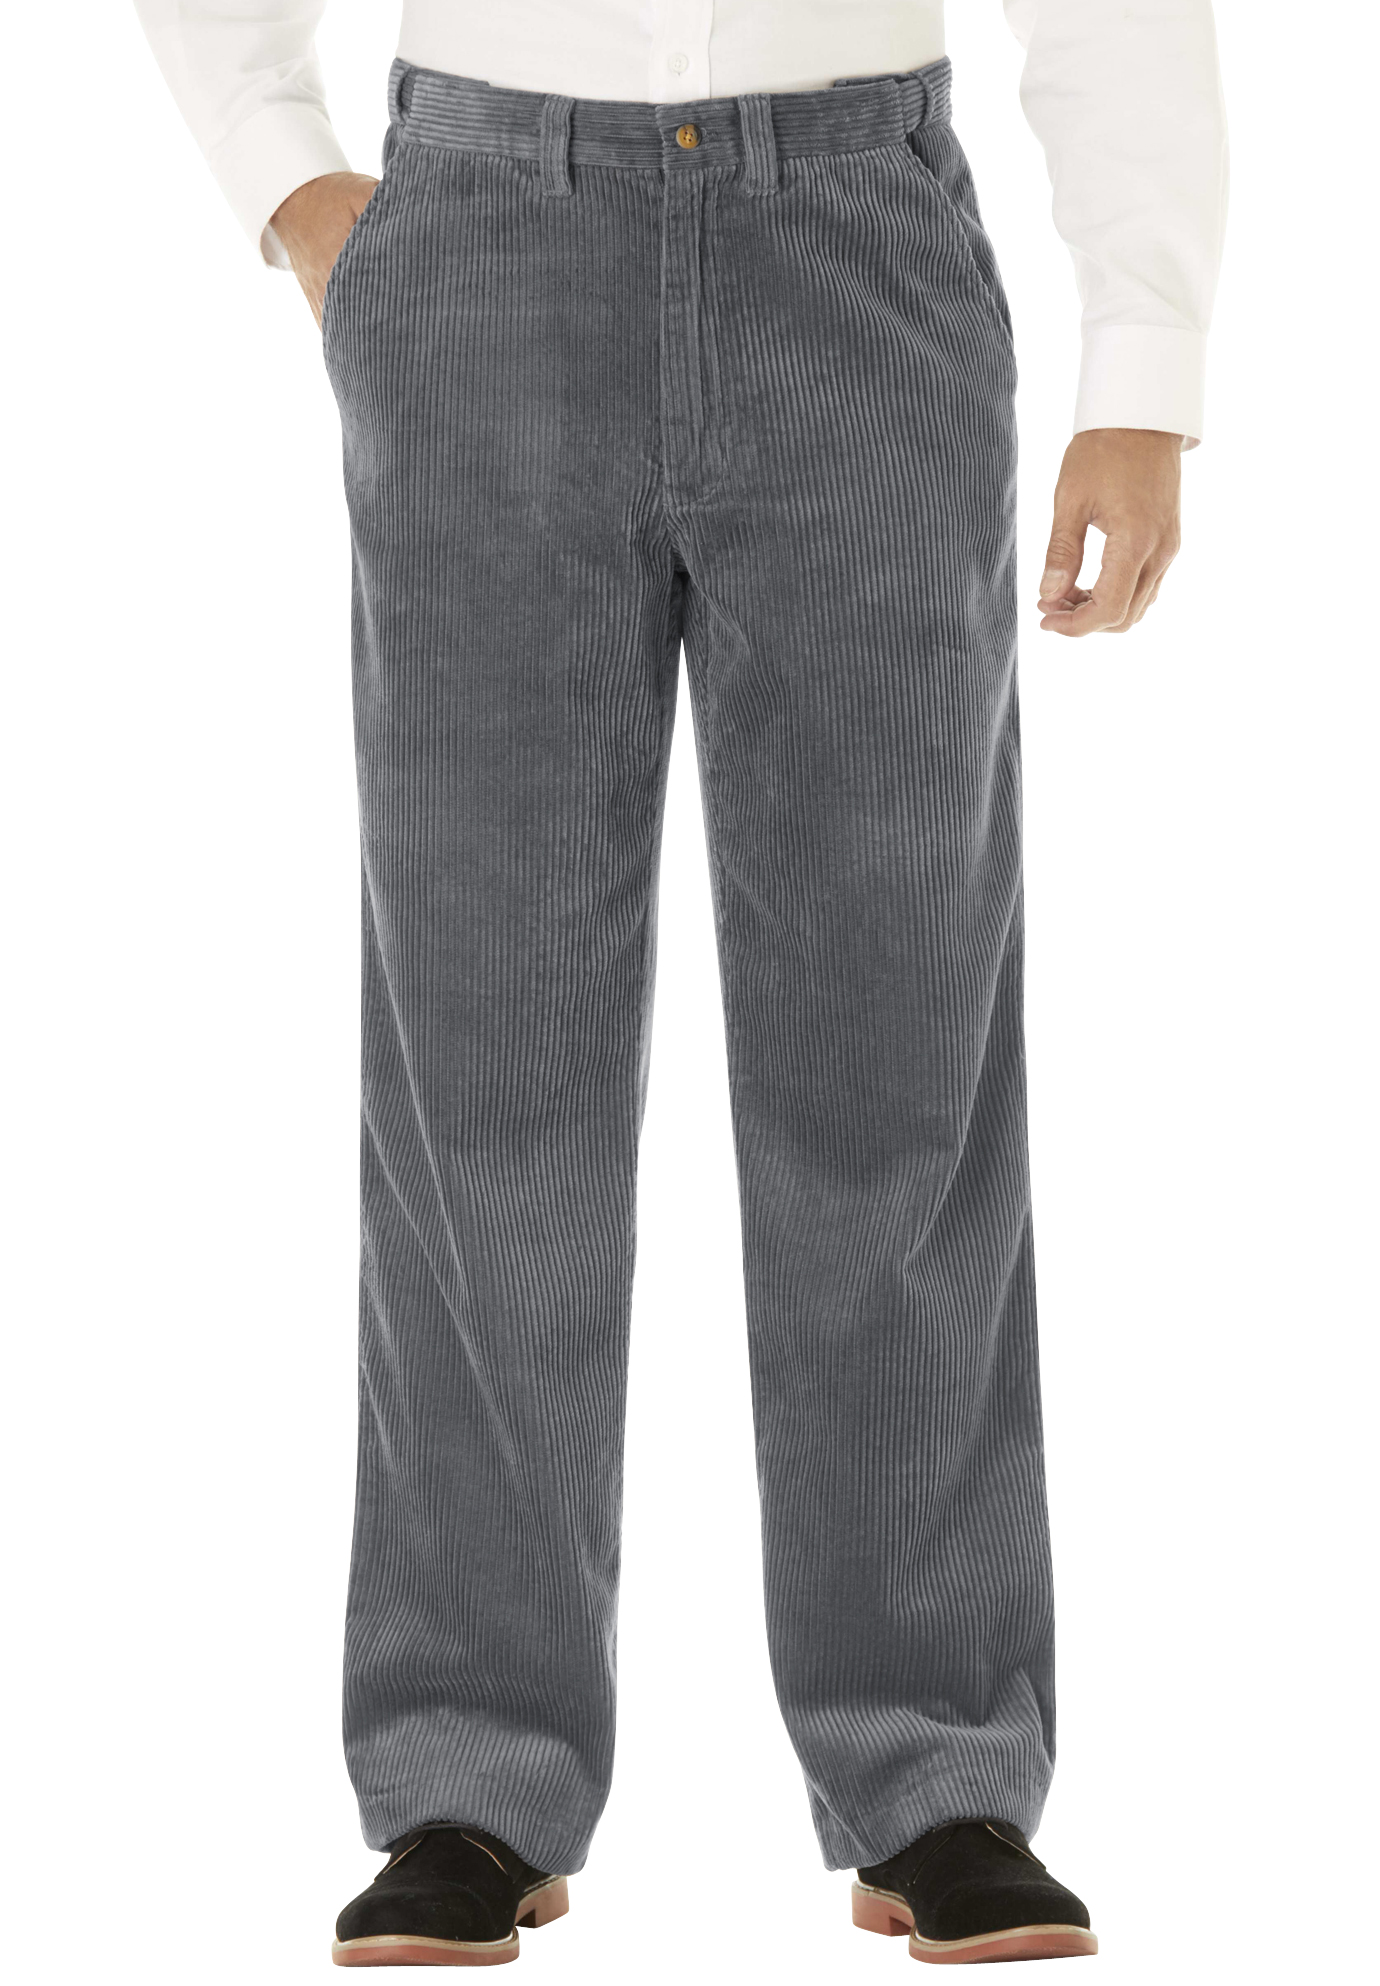 Six-Wale Corduroy Plain Front Pants| Big and Tall Pants & Shorts ...